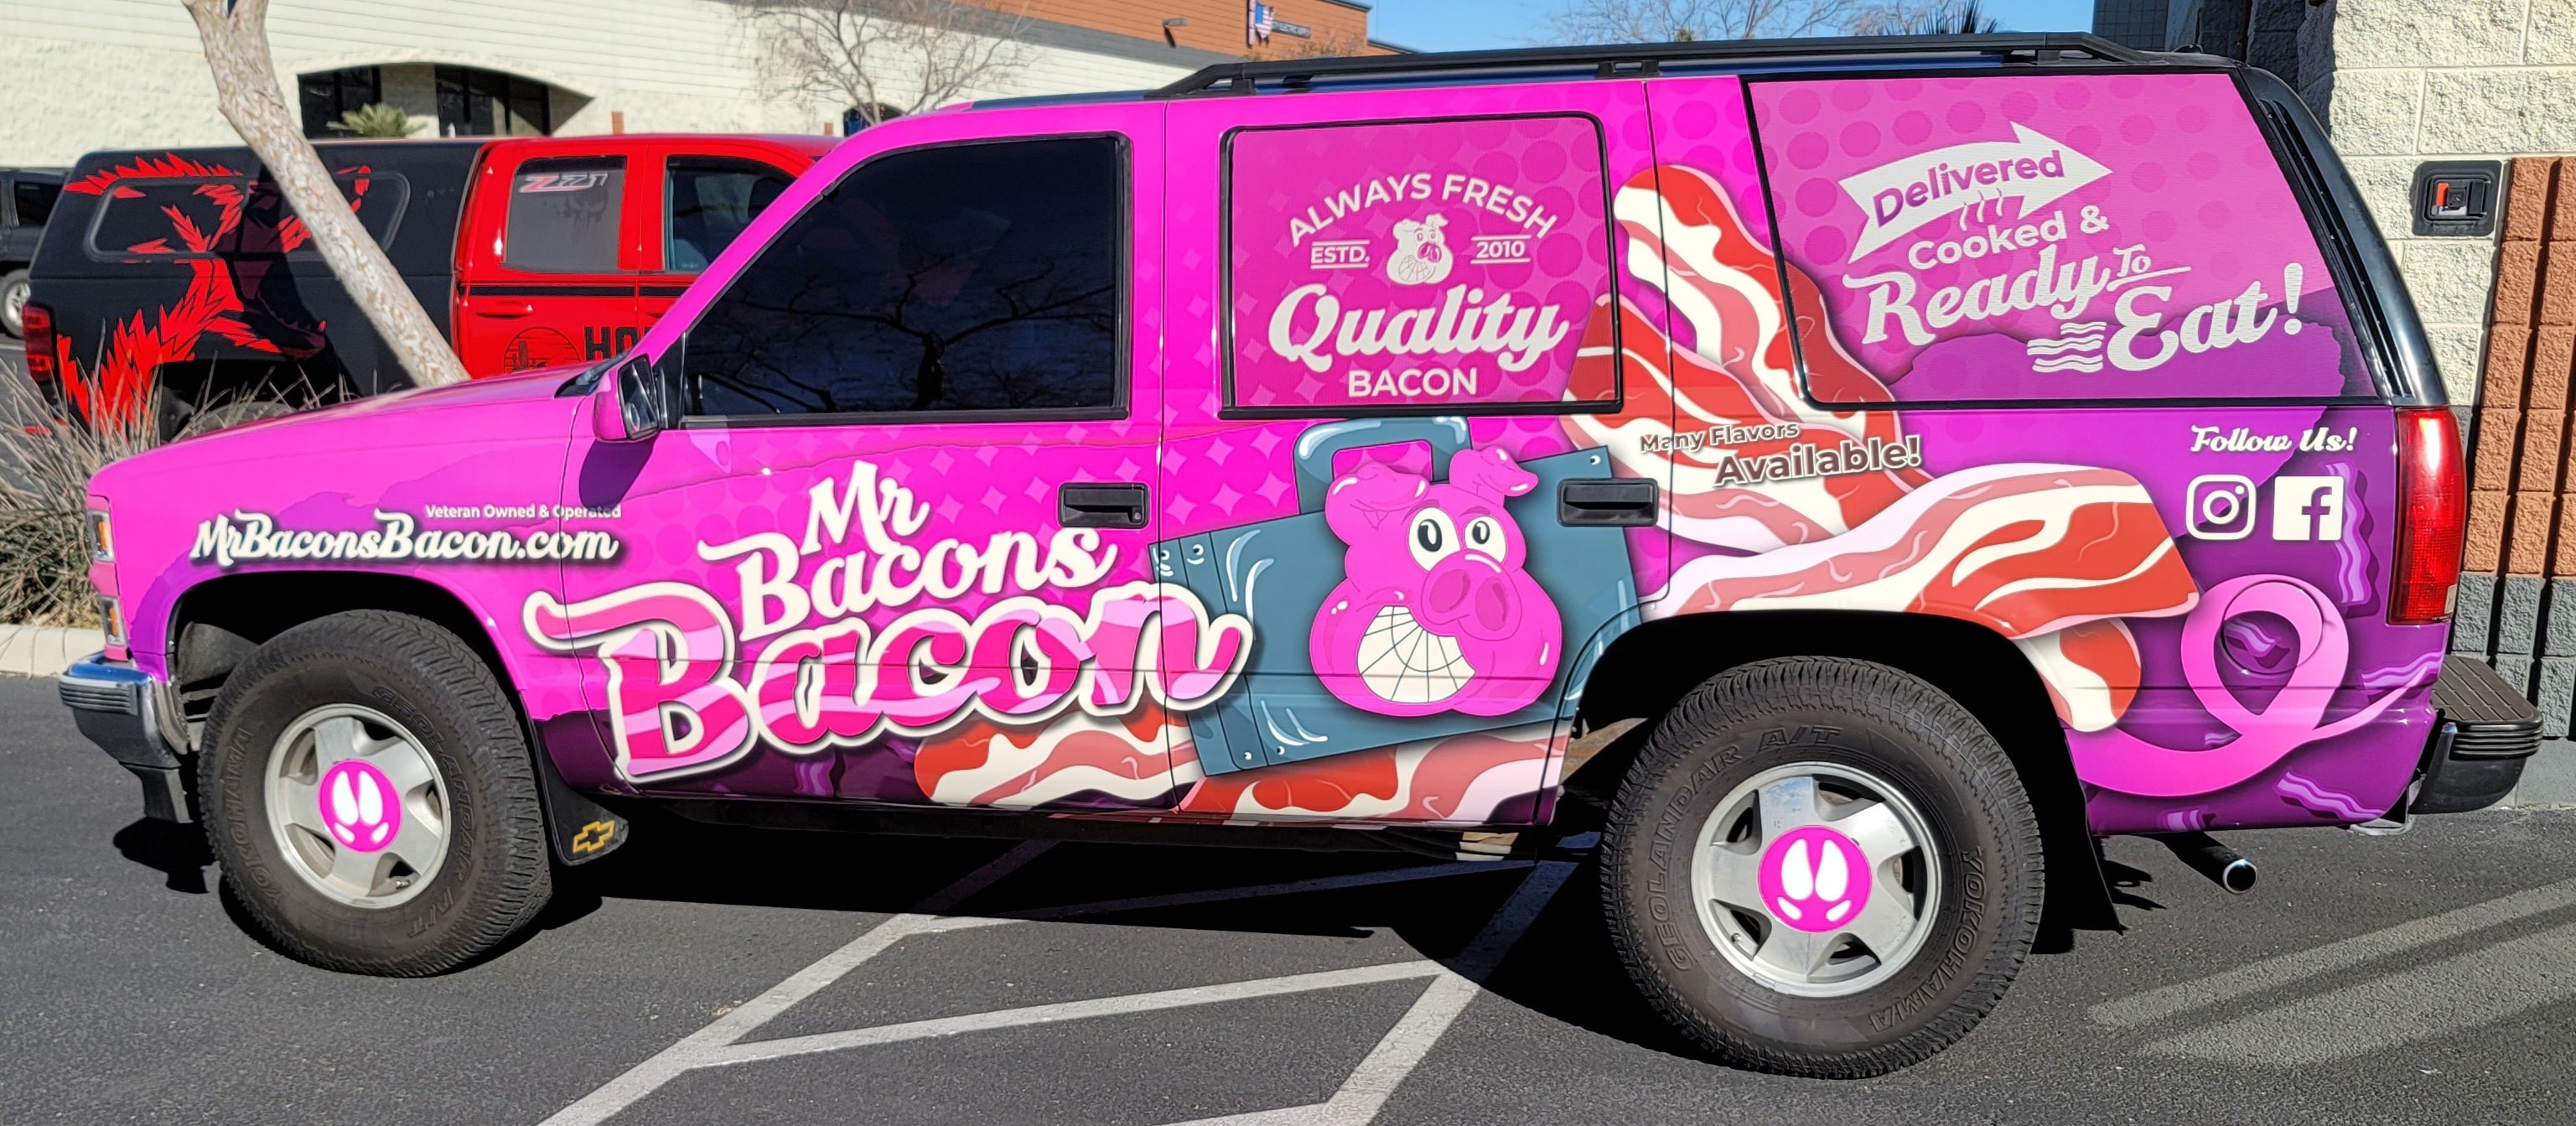 Mr. Bacon's Bacon - Gourmet Bacon Made Fresh and shipped to YOU! – Mr BACON